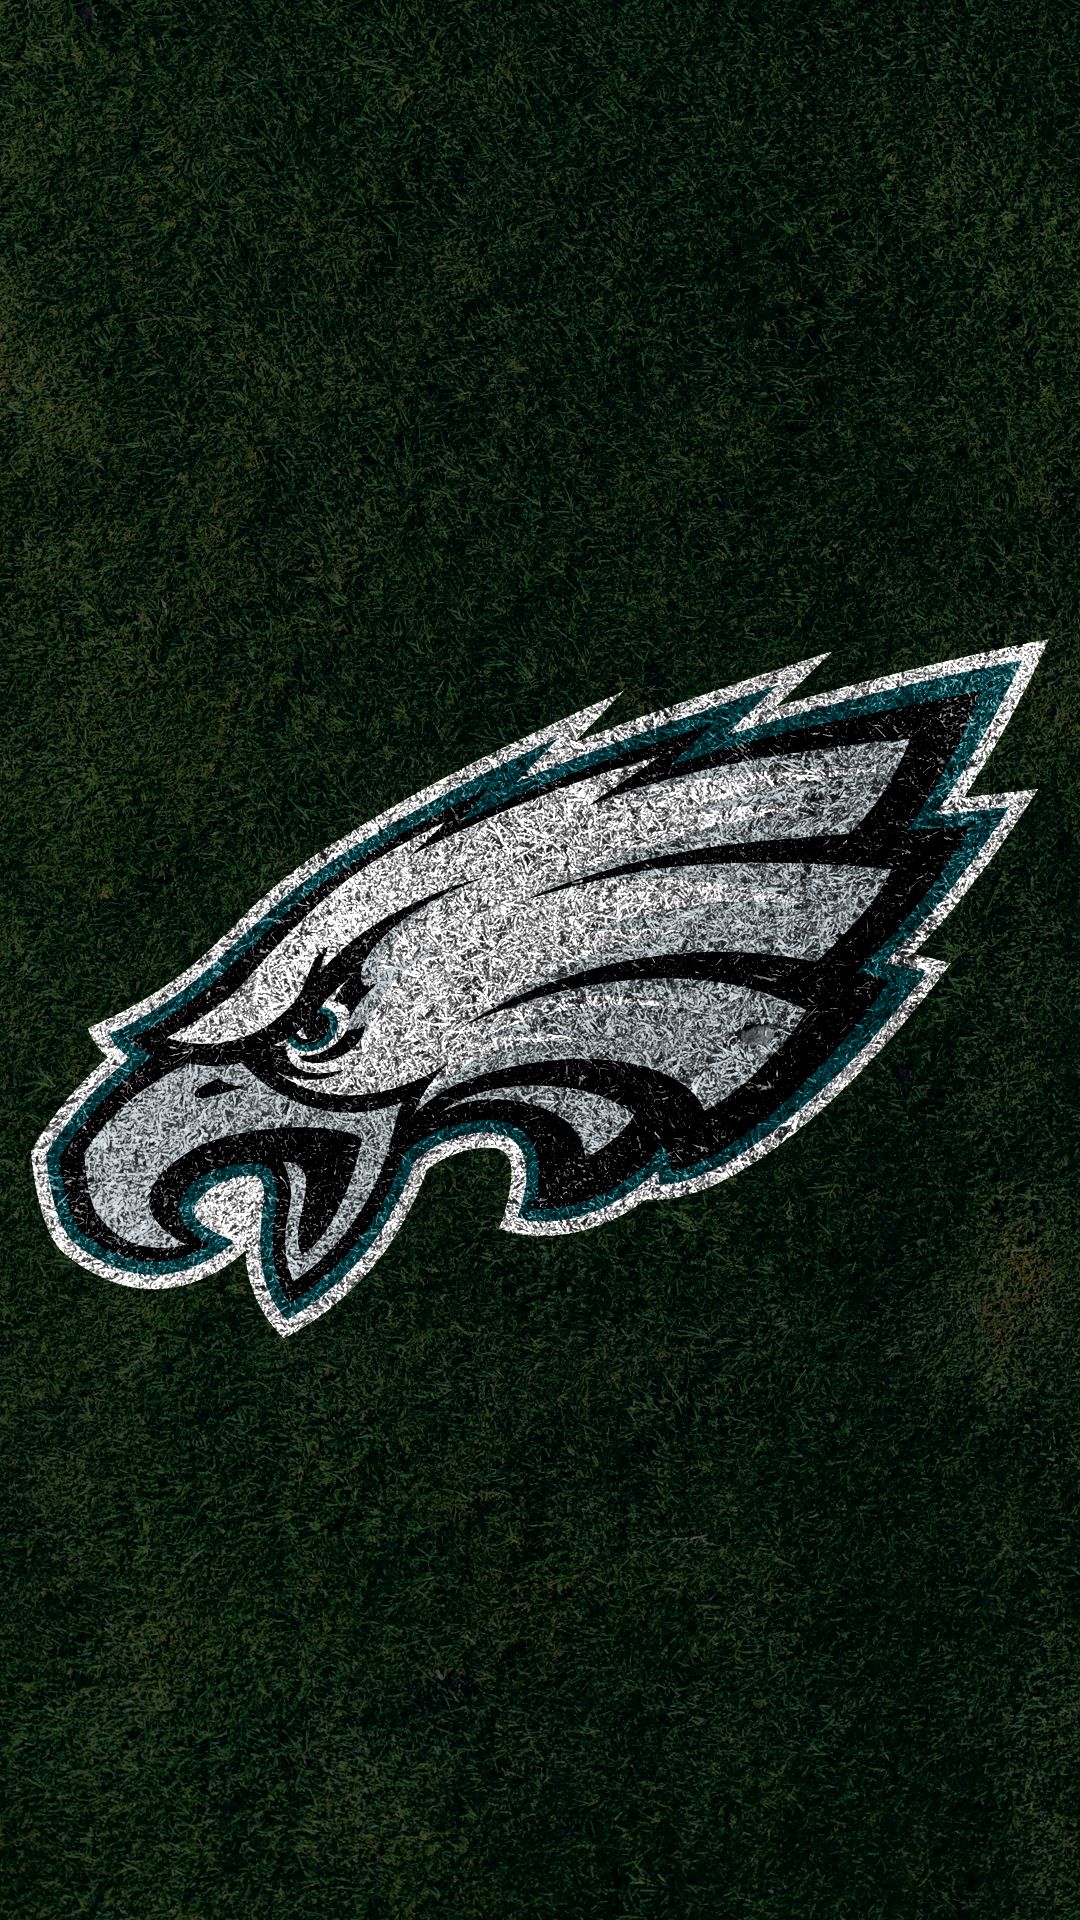 Philadelphia Eagles - Misc Logo (1996) - Football Sports Vector SVG Logo in  5 formats